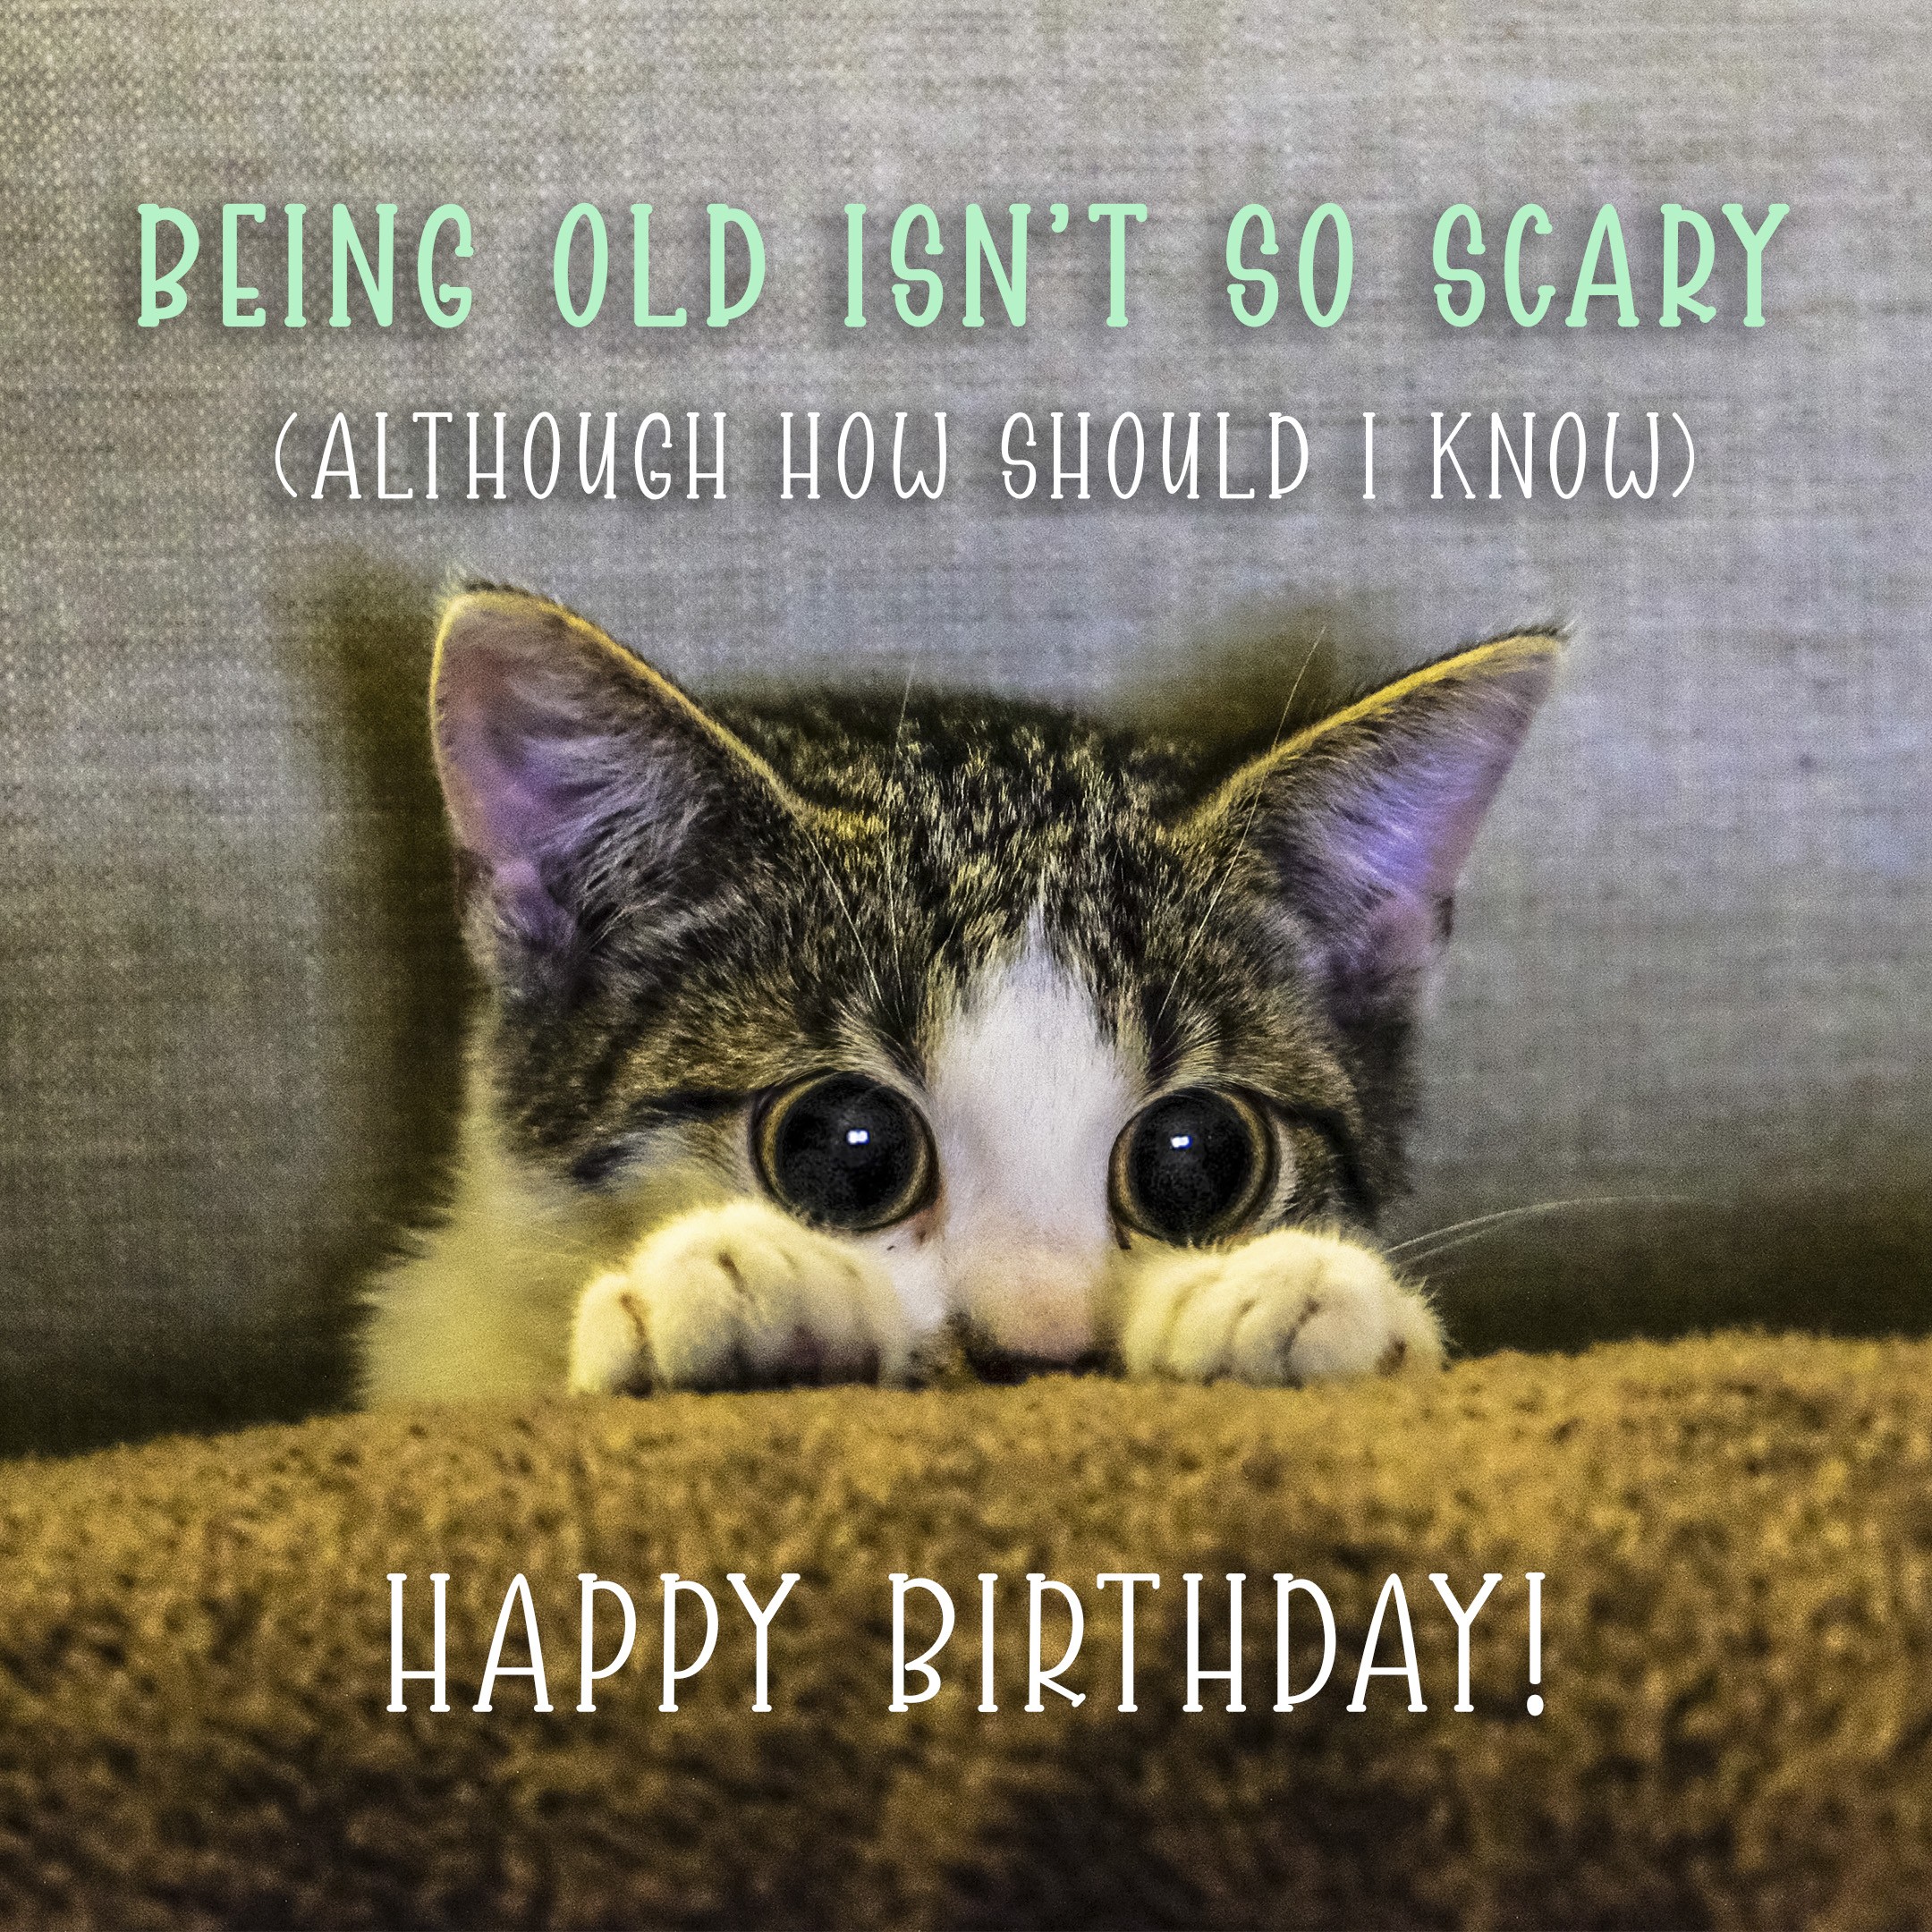 Free Funny Happy Birthday Image With Cat 